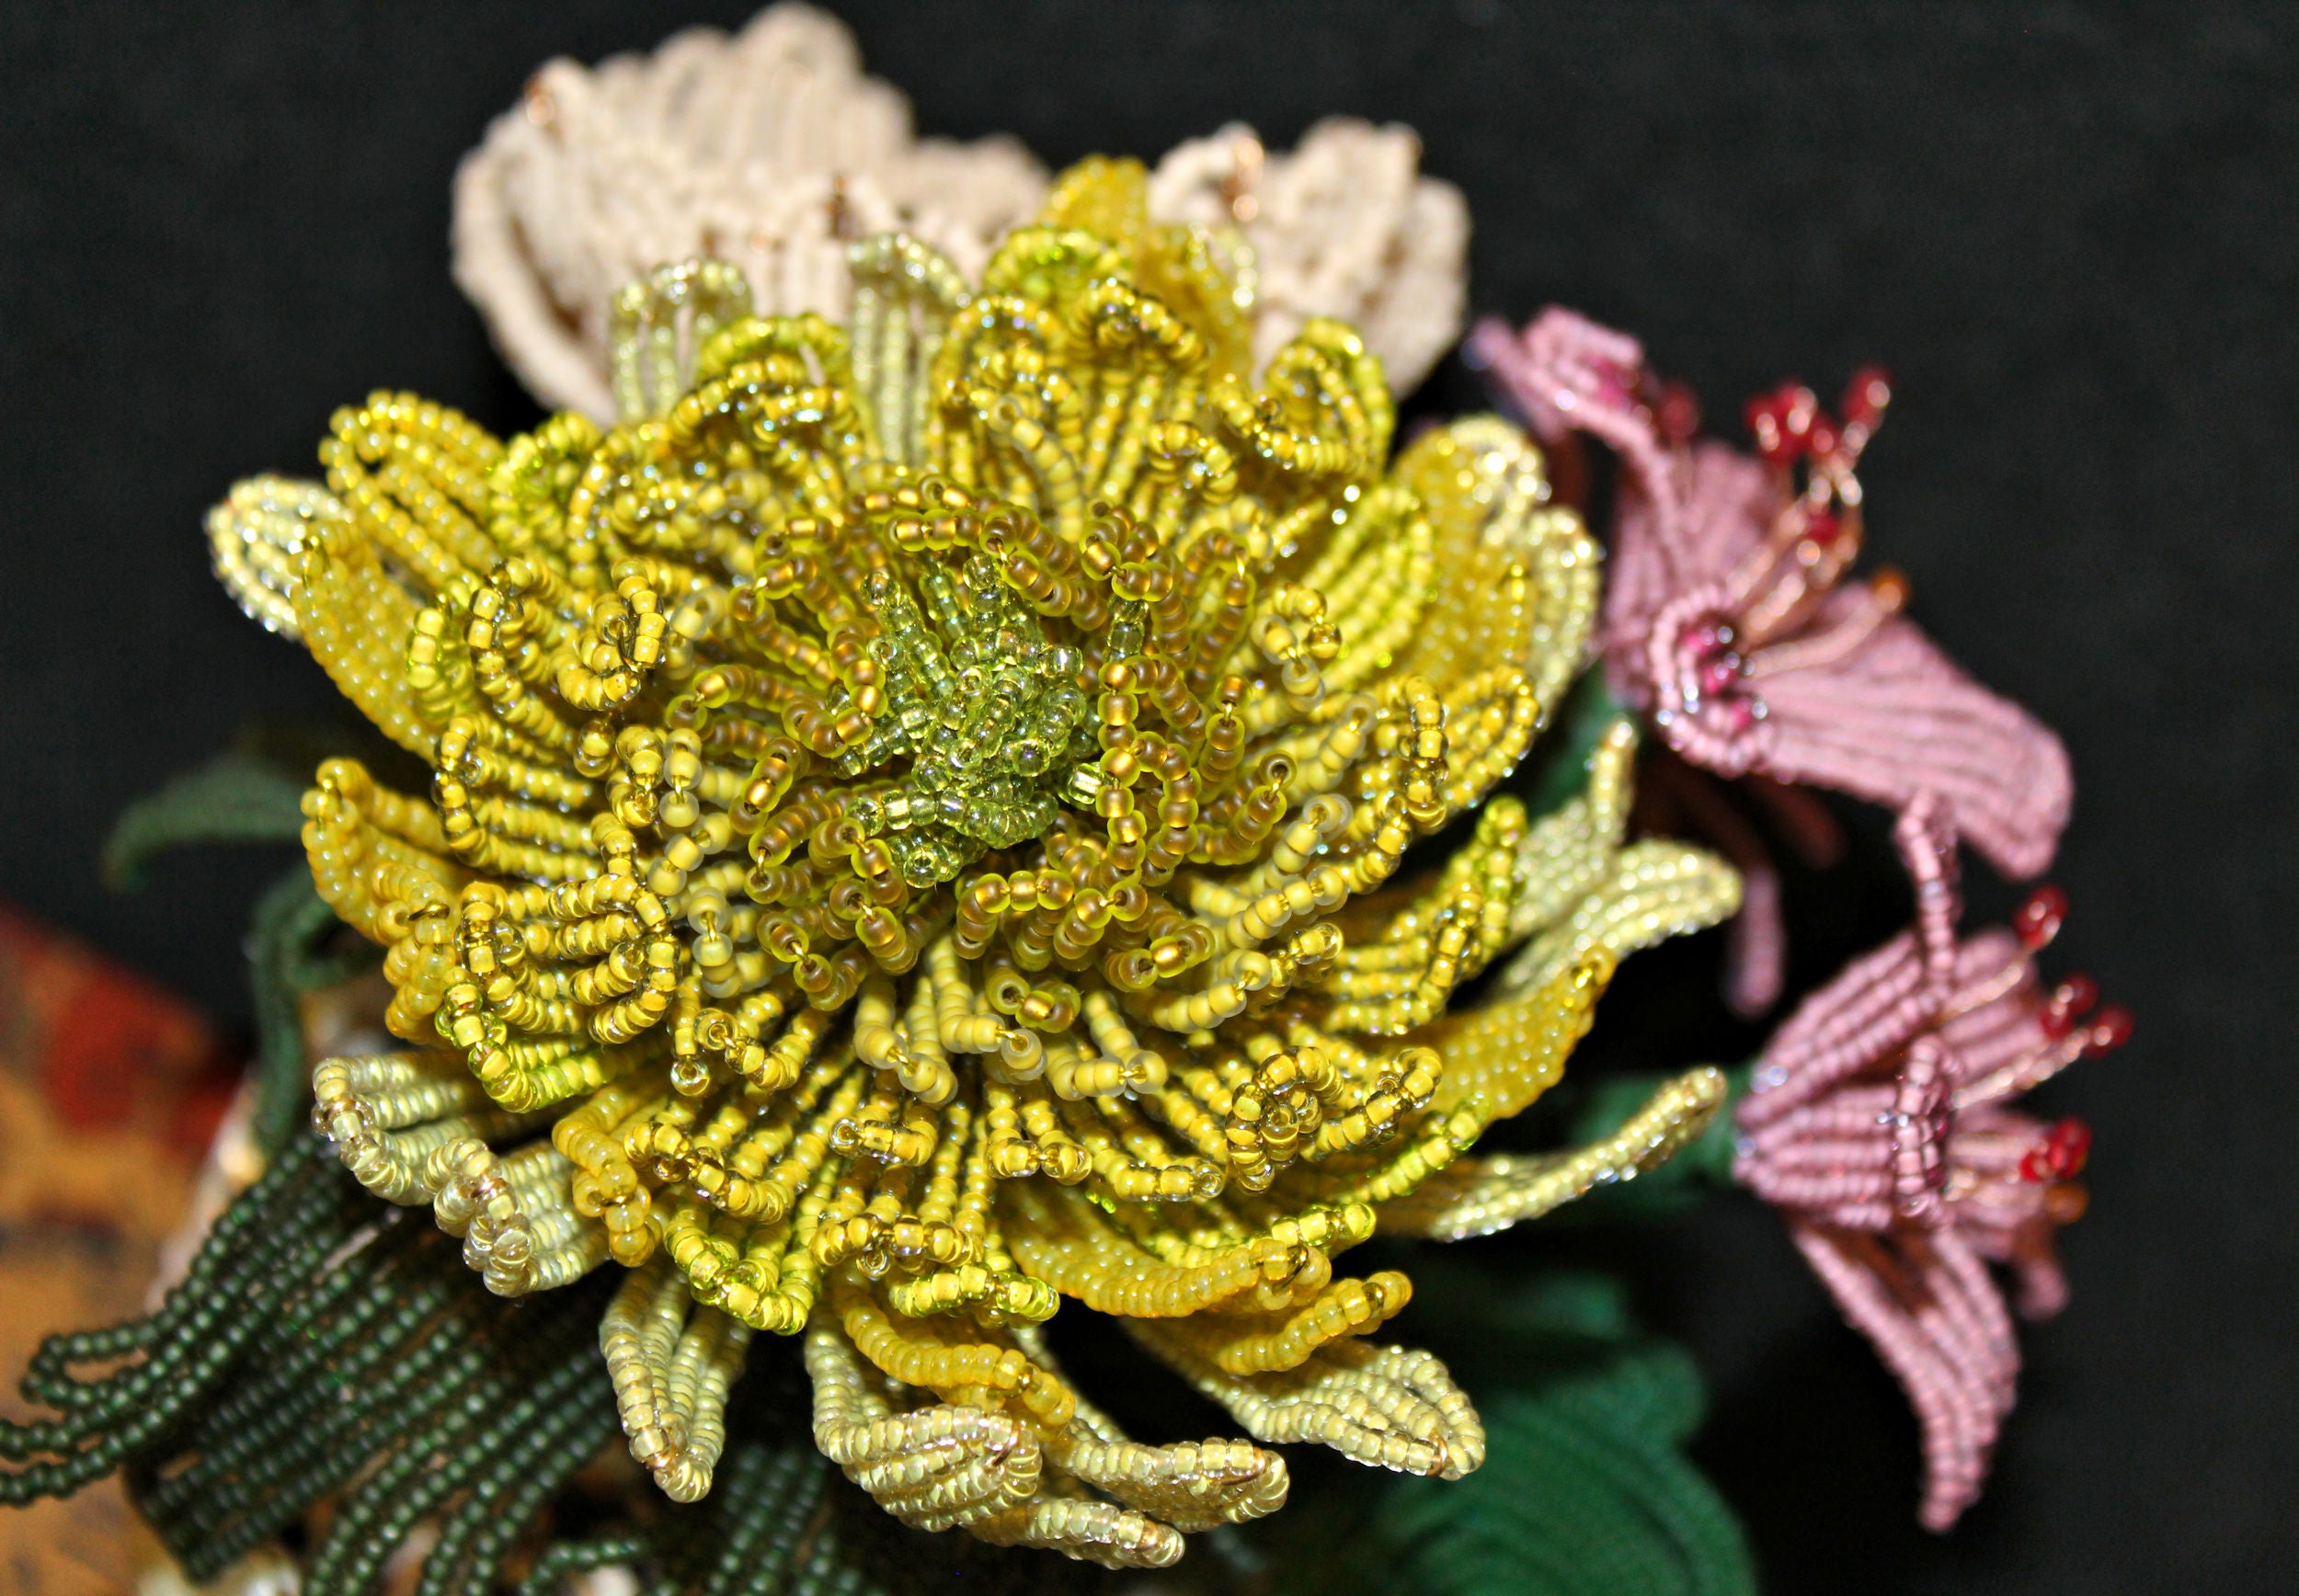 Sarah Siddons (Anemone, Chrysanthemum, and Oak Leaf Geraniums)